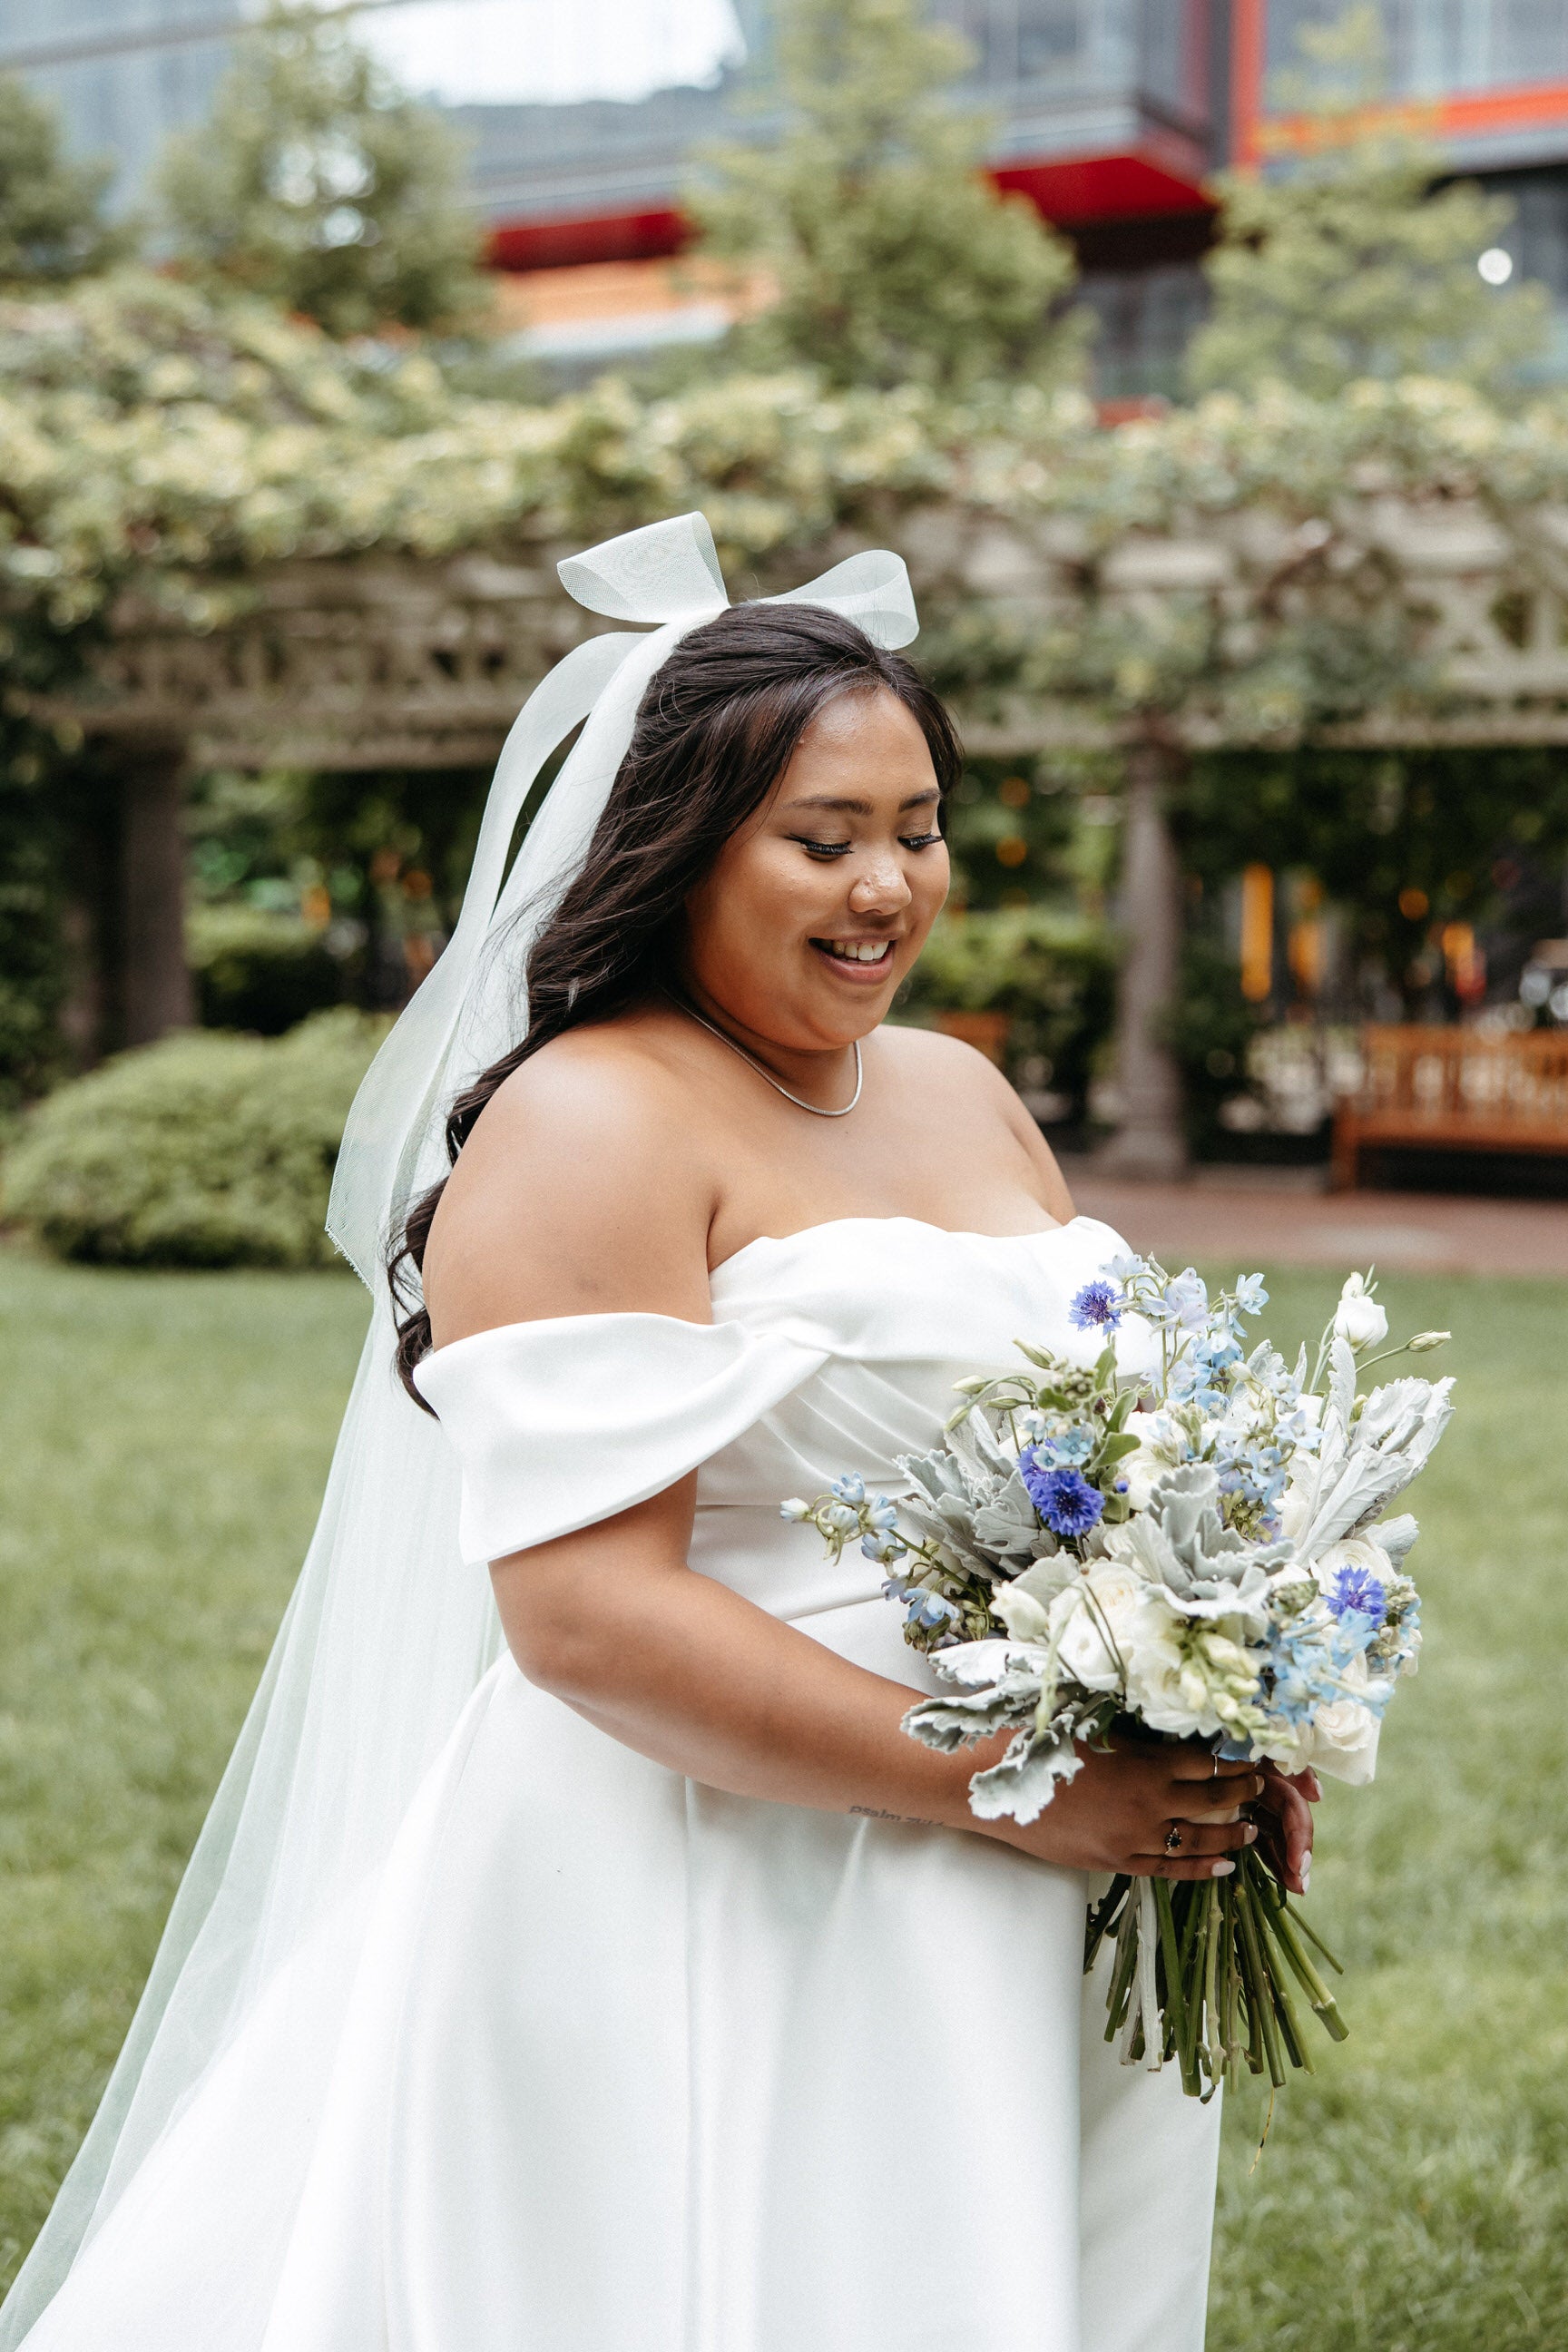 40 Ways To Wear Wedding Flower Crowns & Hair Accessories  Wedding hair  down, Wedding hairstyles with veil, Bridal veils and headpieces